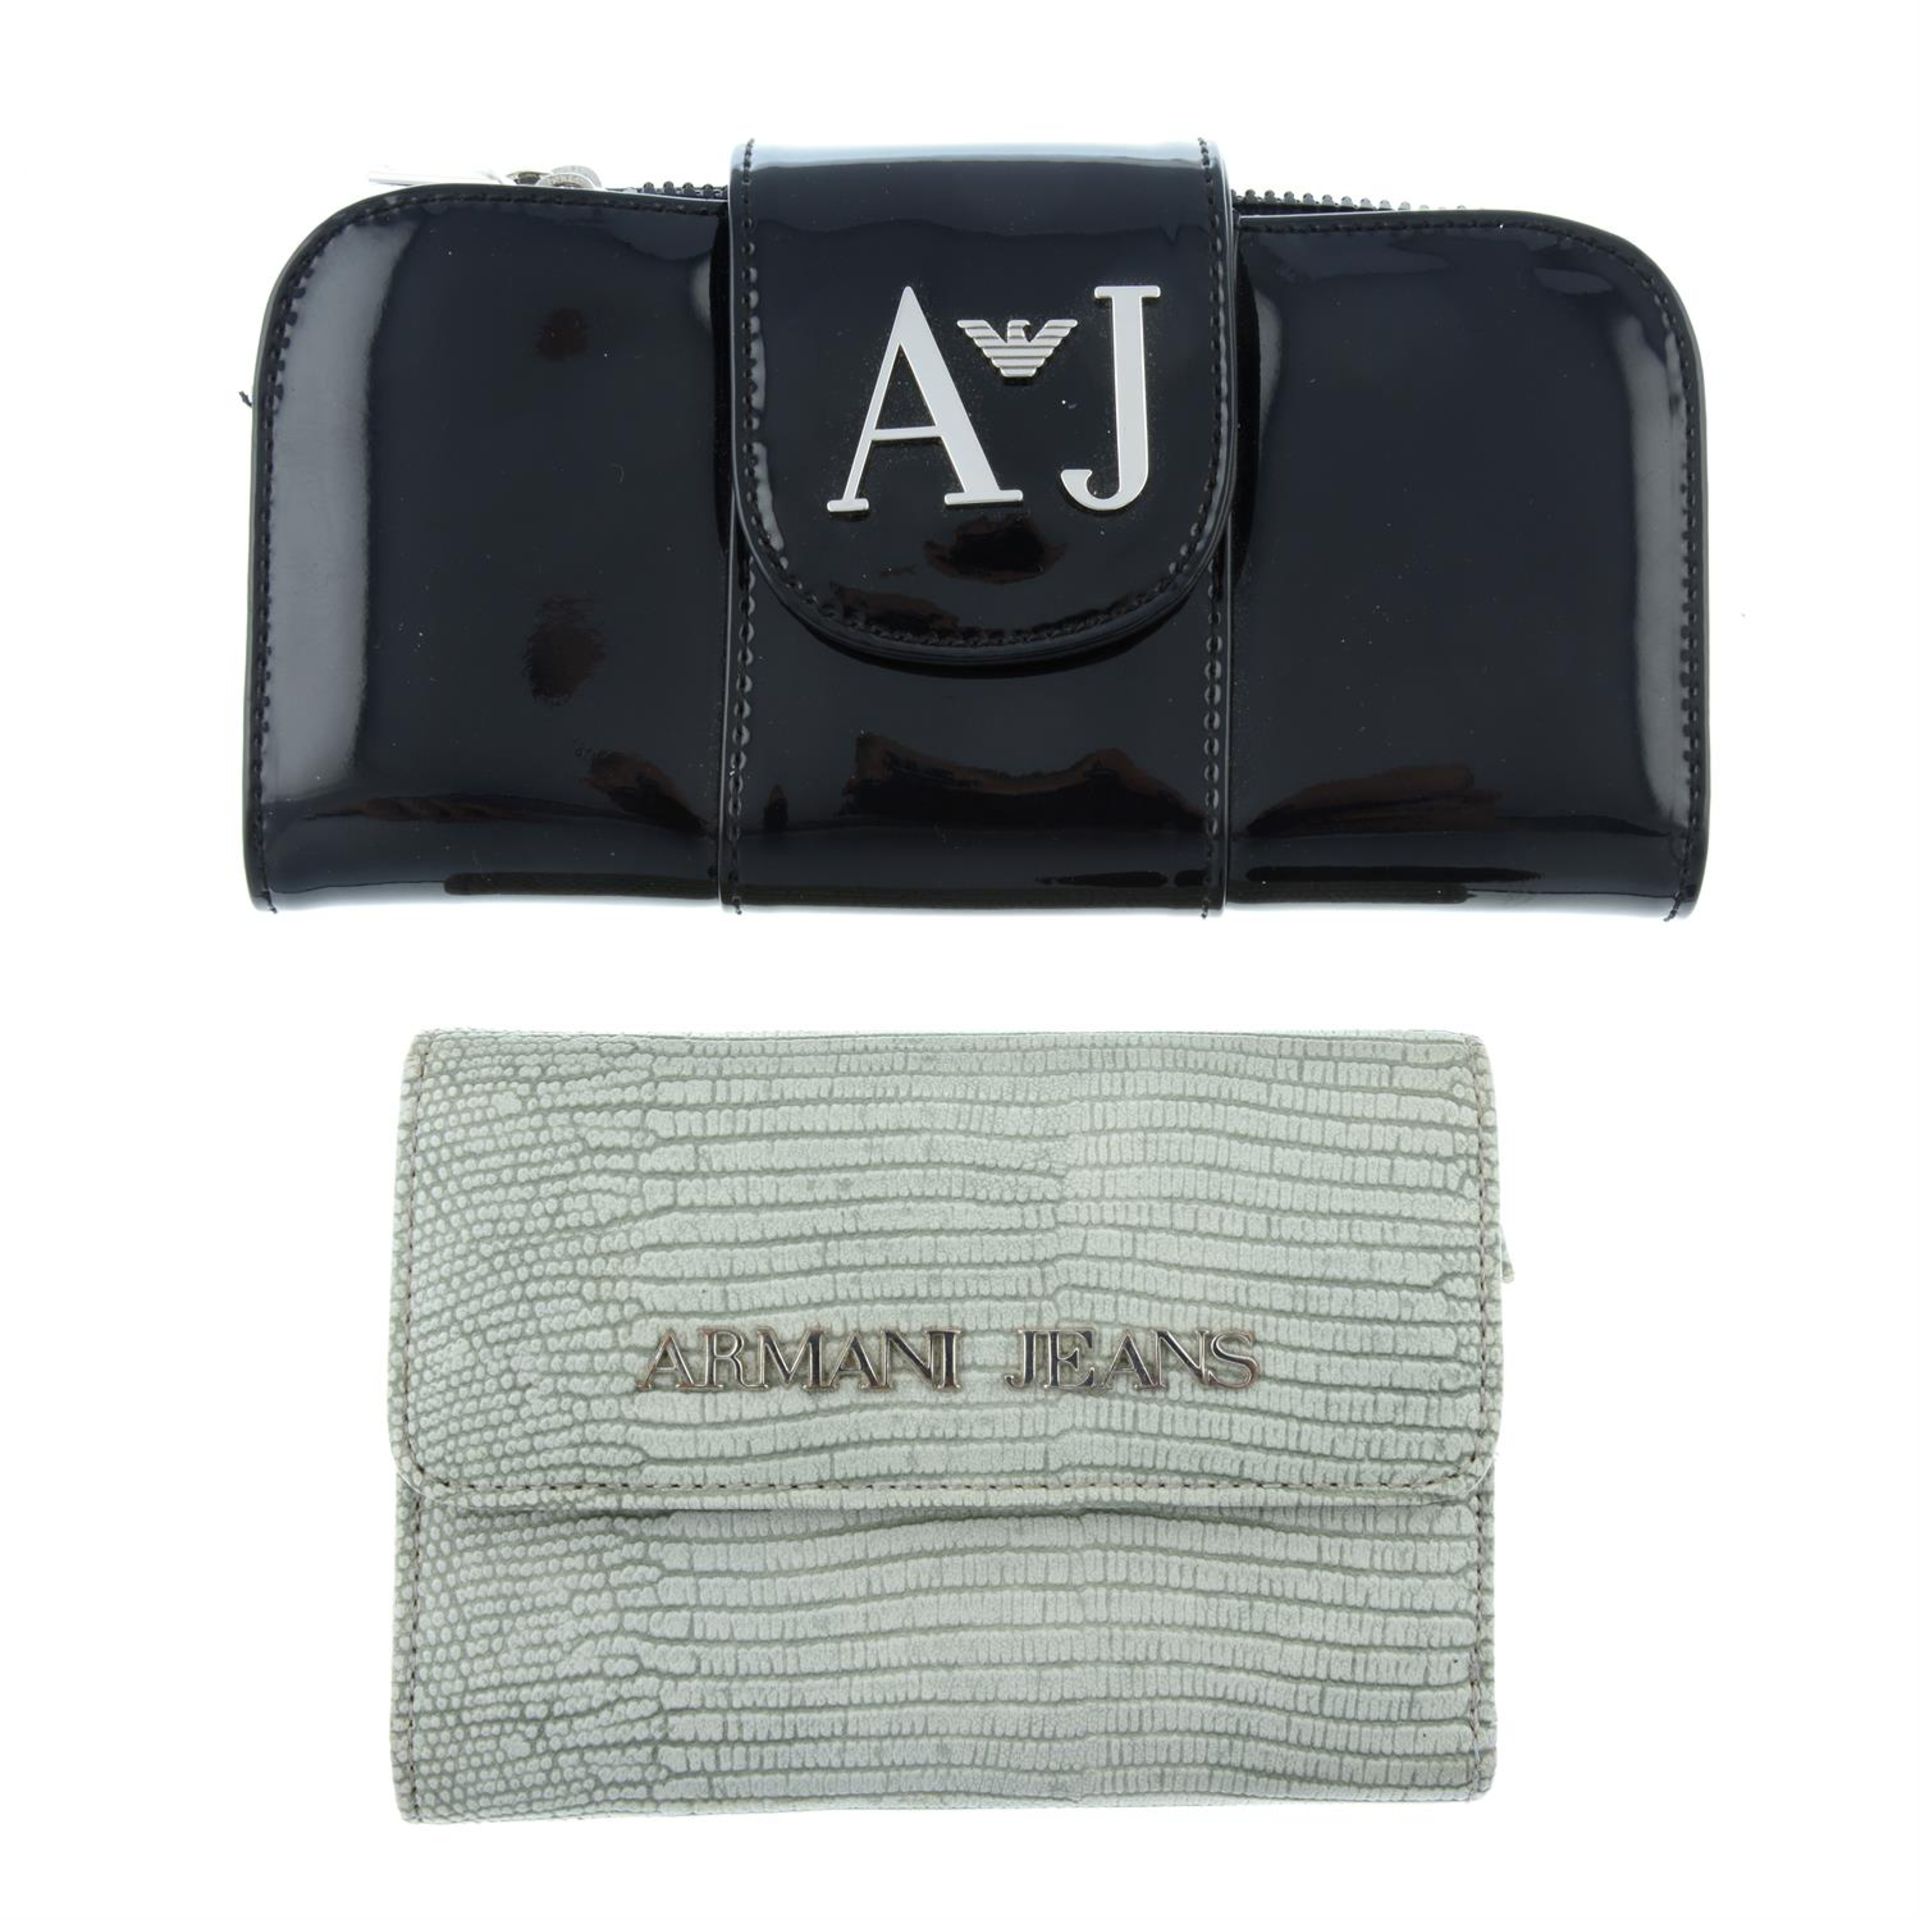 ARMANI JEANS - two wallets.